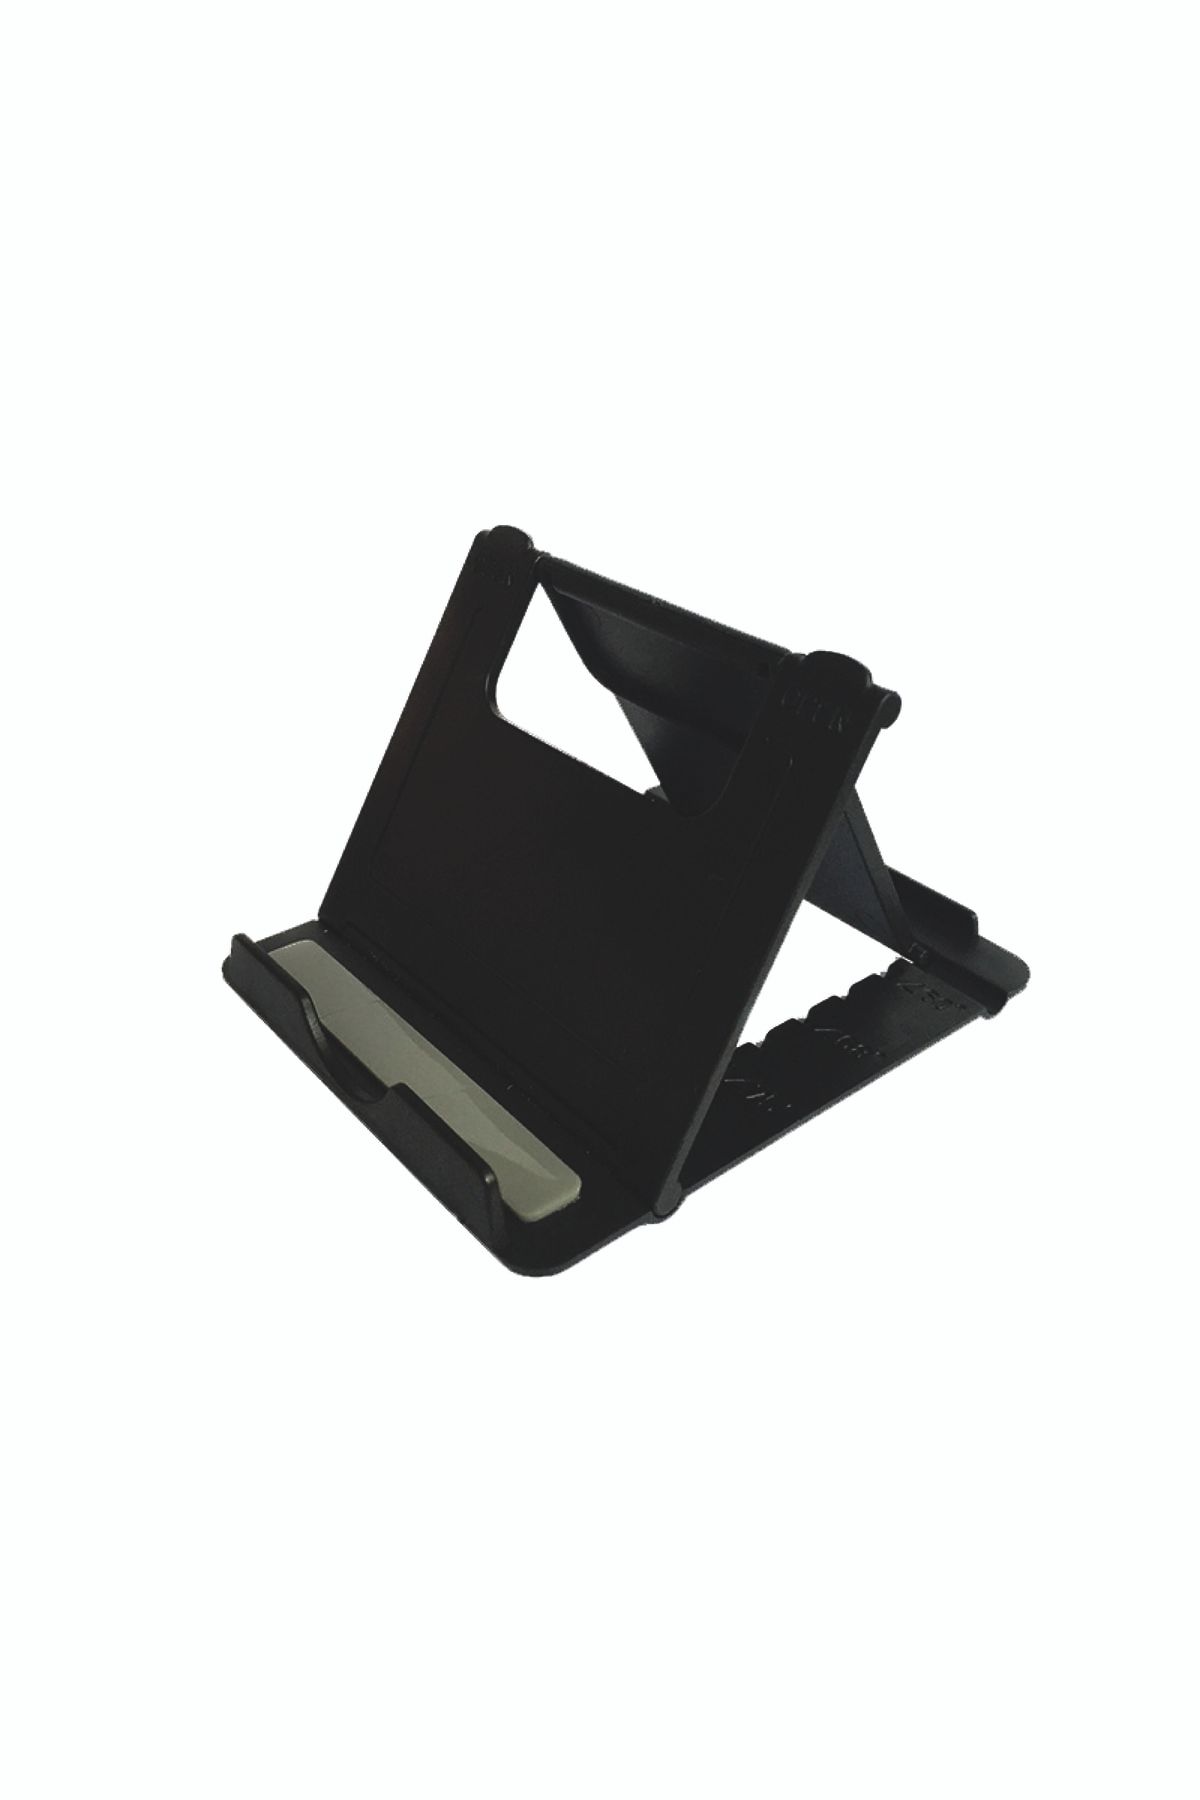 Deilmi Universal Telefon Ve Tablet Stand Tutucu Foldstand - Siyah